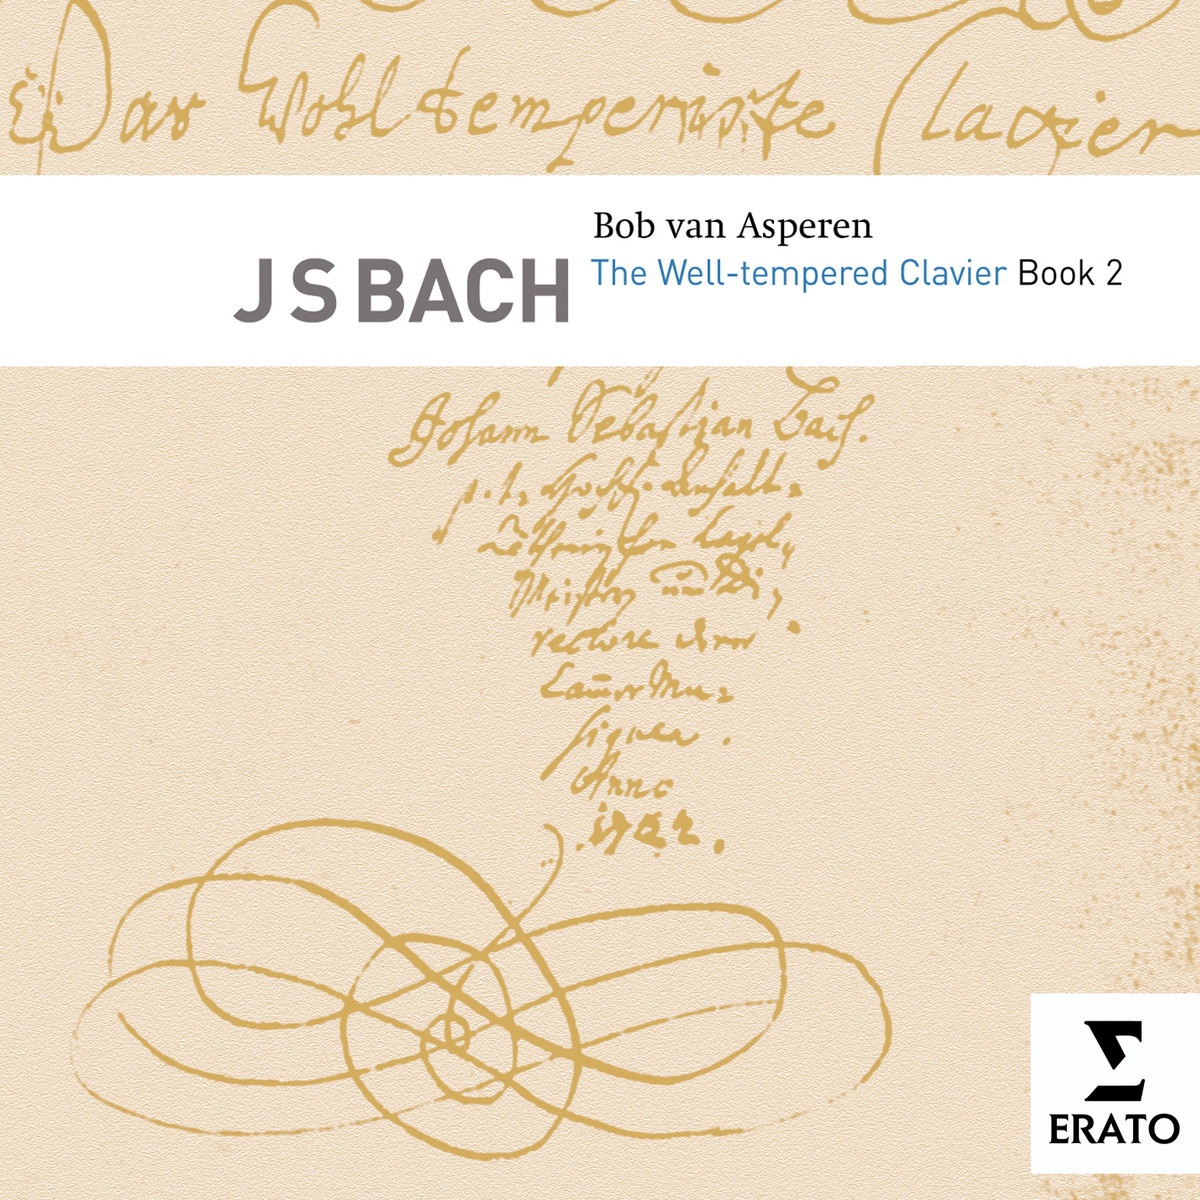 Das wohltemperierte Klavier Book Two BWV 870-893, Book Two, No. 1 in C major BWV 870: Fugue